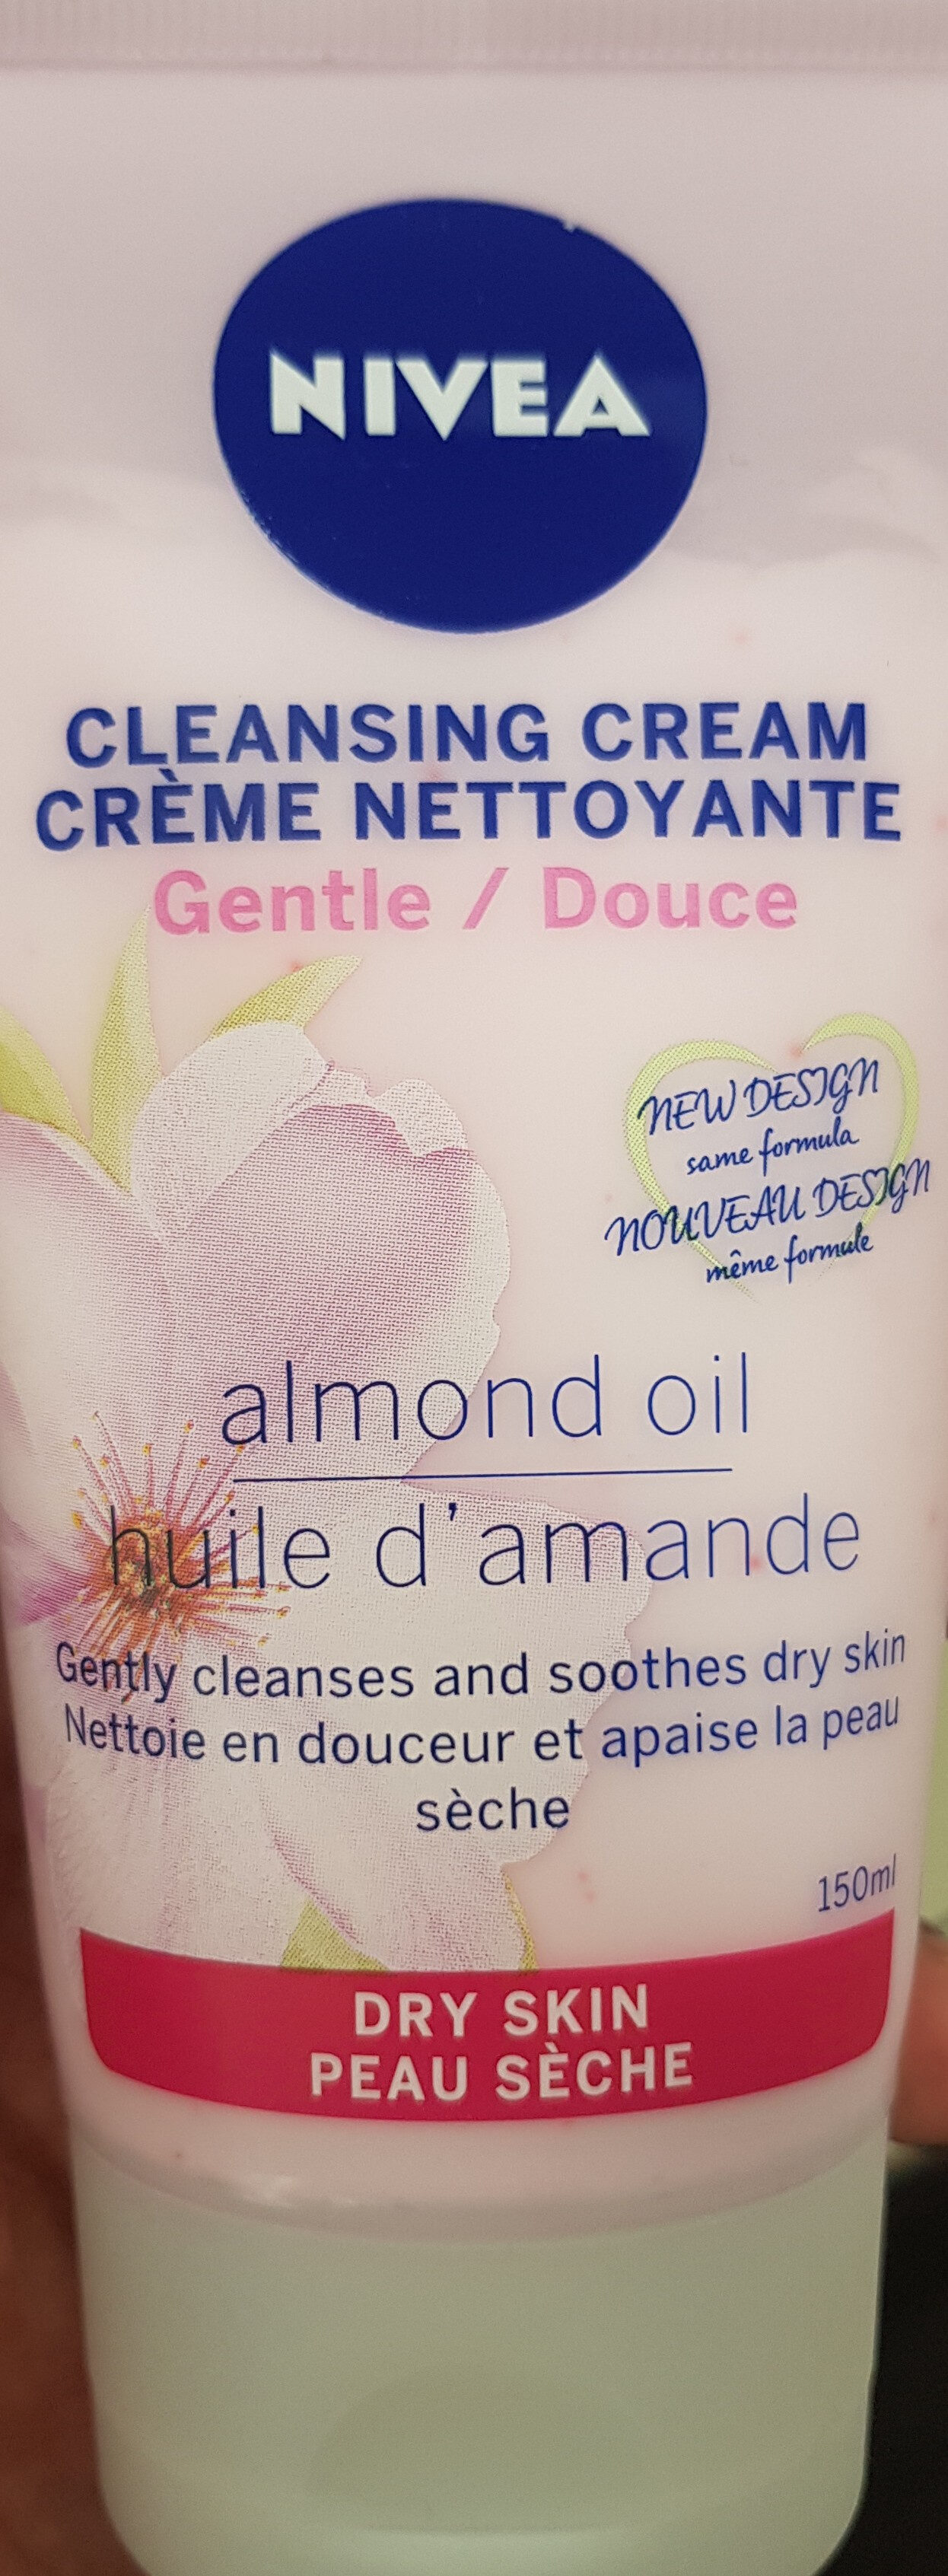 cleansing cream - Product - en